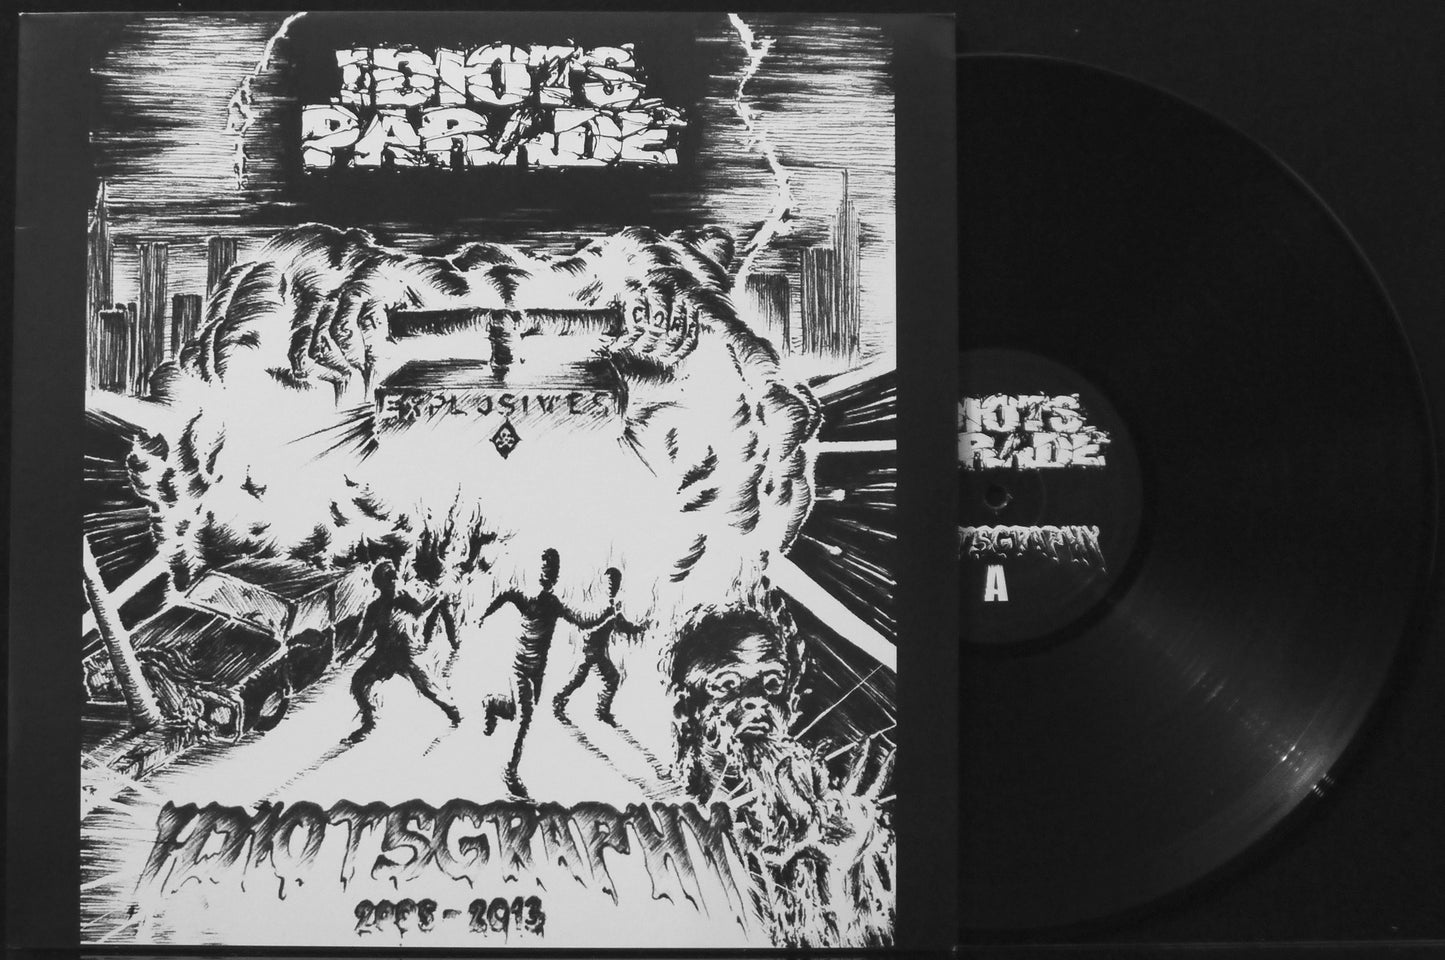 IDIOTS PARADE - Idiotsgraphy 2003 - 2013 12"